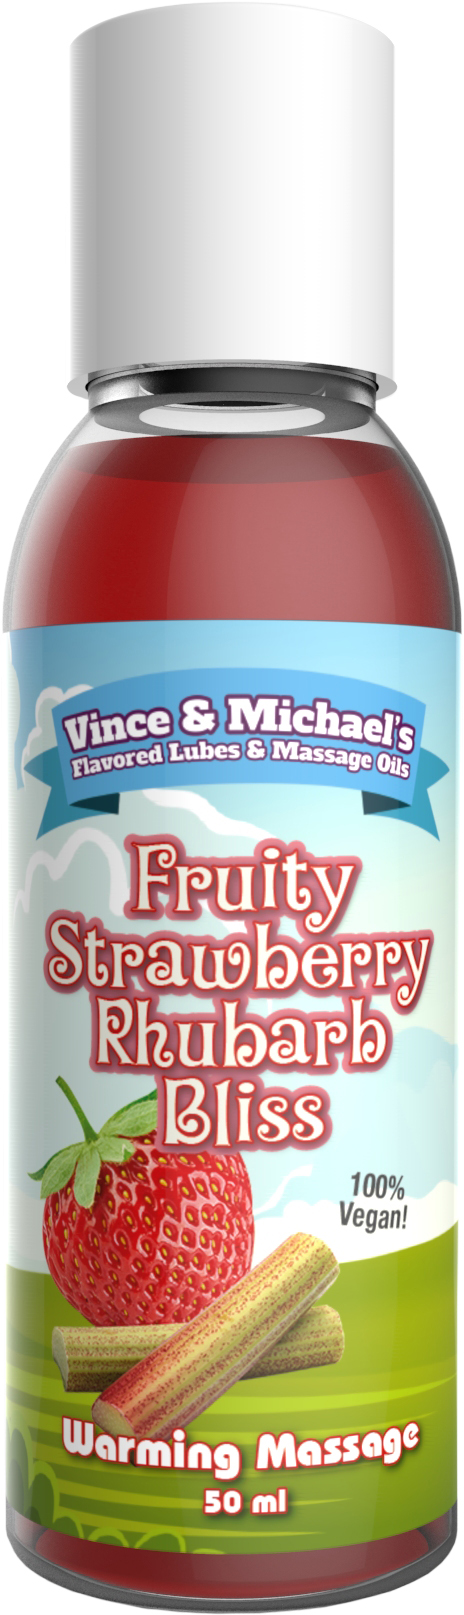 VINCE & MICHAEL's Warming Fruity Strawberry Rhubarb Bliss 50ml